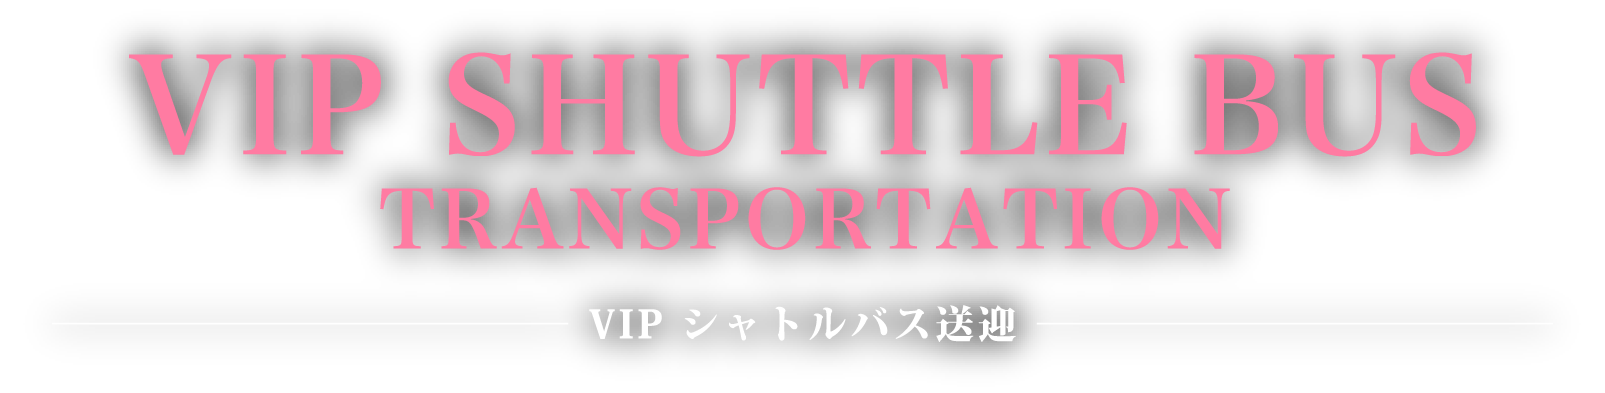 VIP SHUTTLE BUS TRANSPORTATION VIP シャトルバス送迎